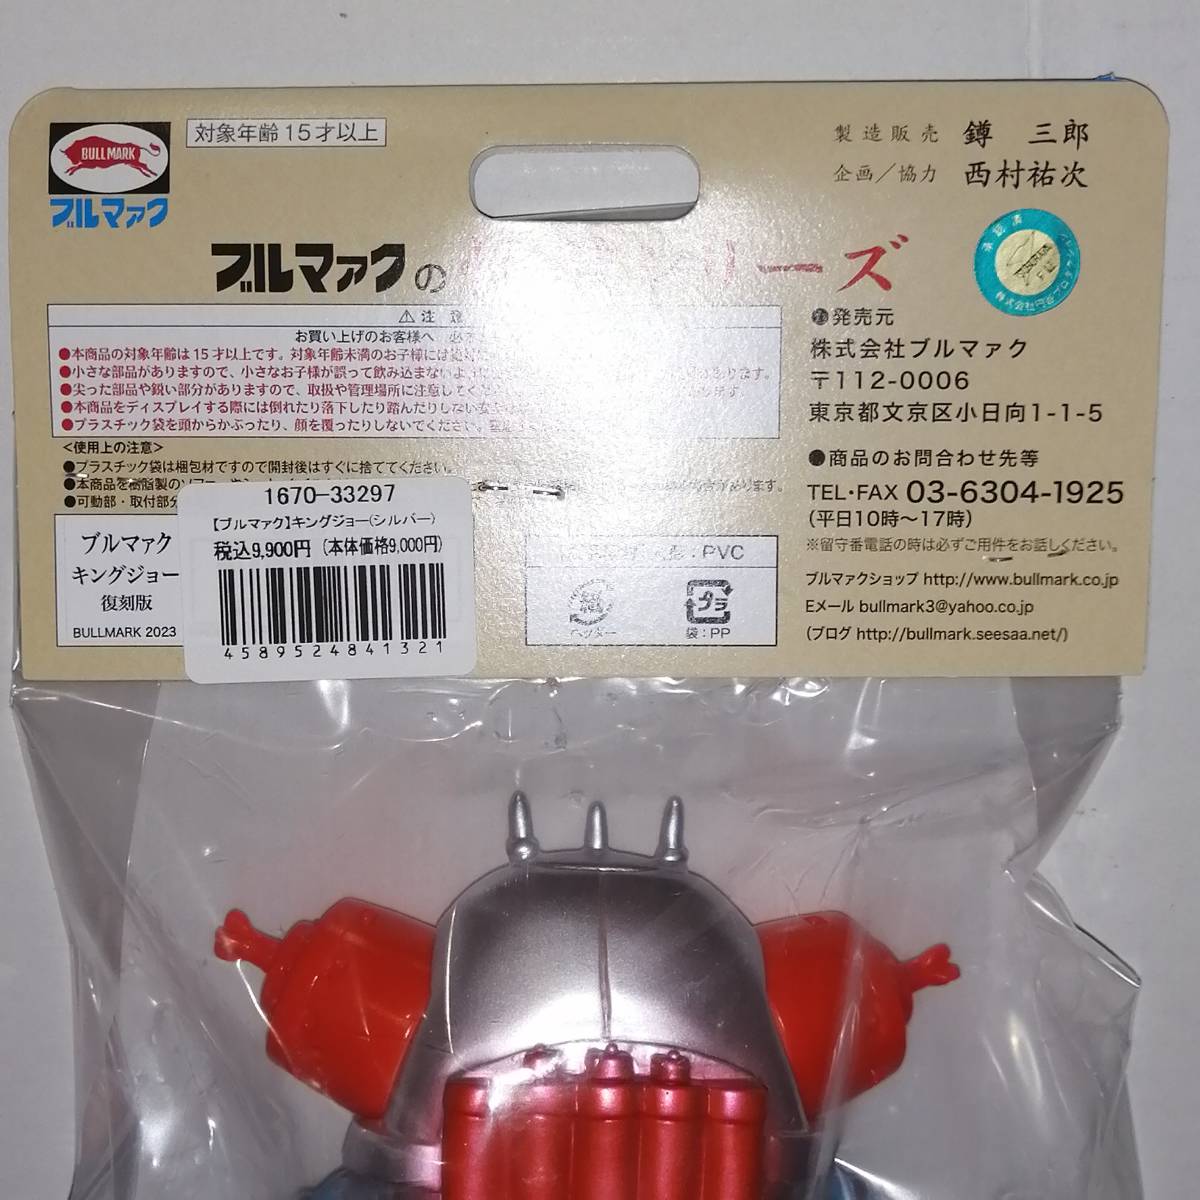 BULLMARKbruma.k sofvi King Joe серебряный осмотр Godzilla Ultraman M1 номер maru солнечный Bear модель meti com игрушка 